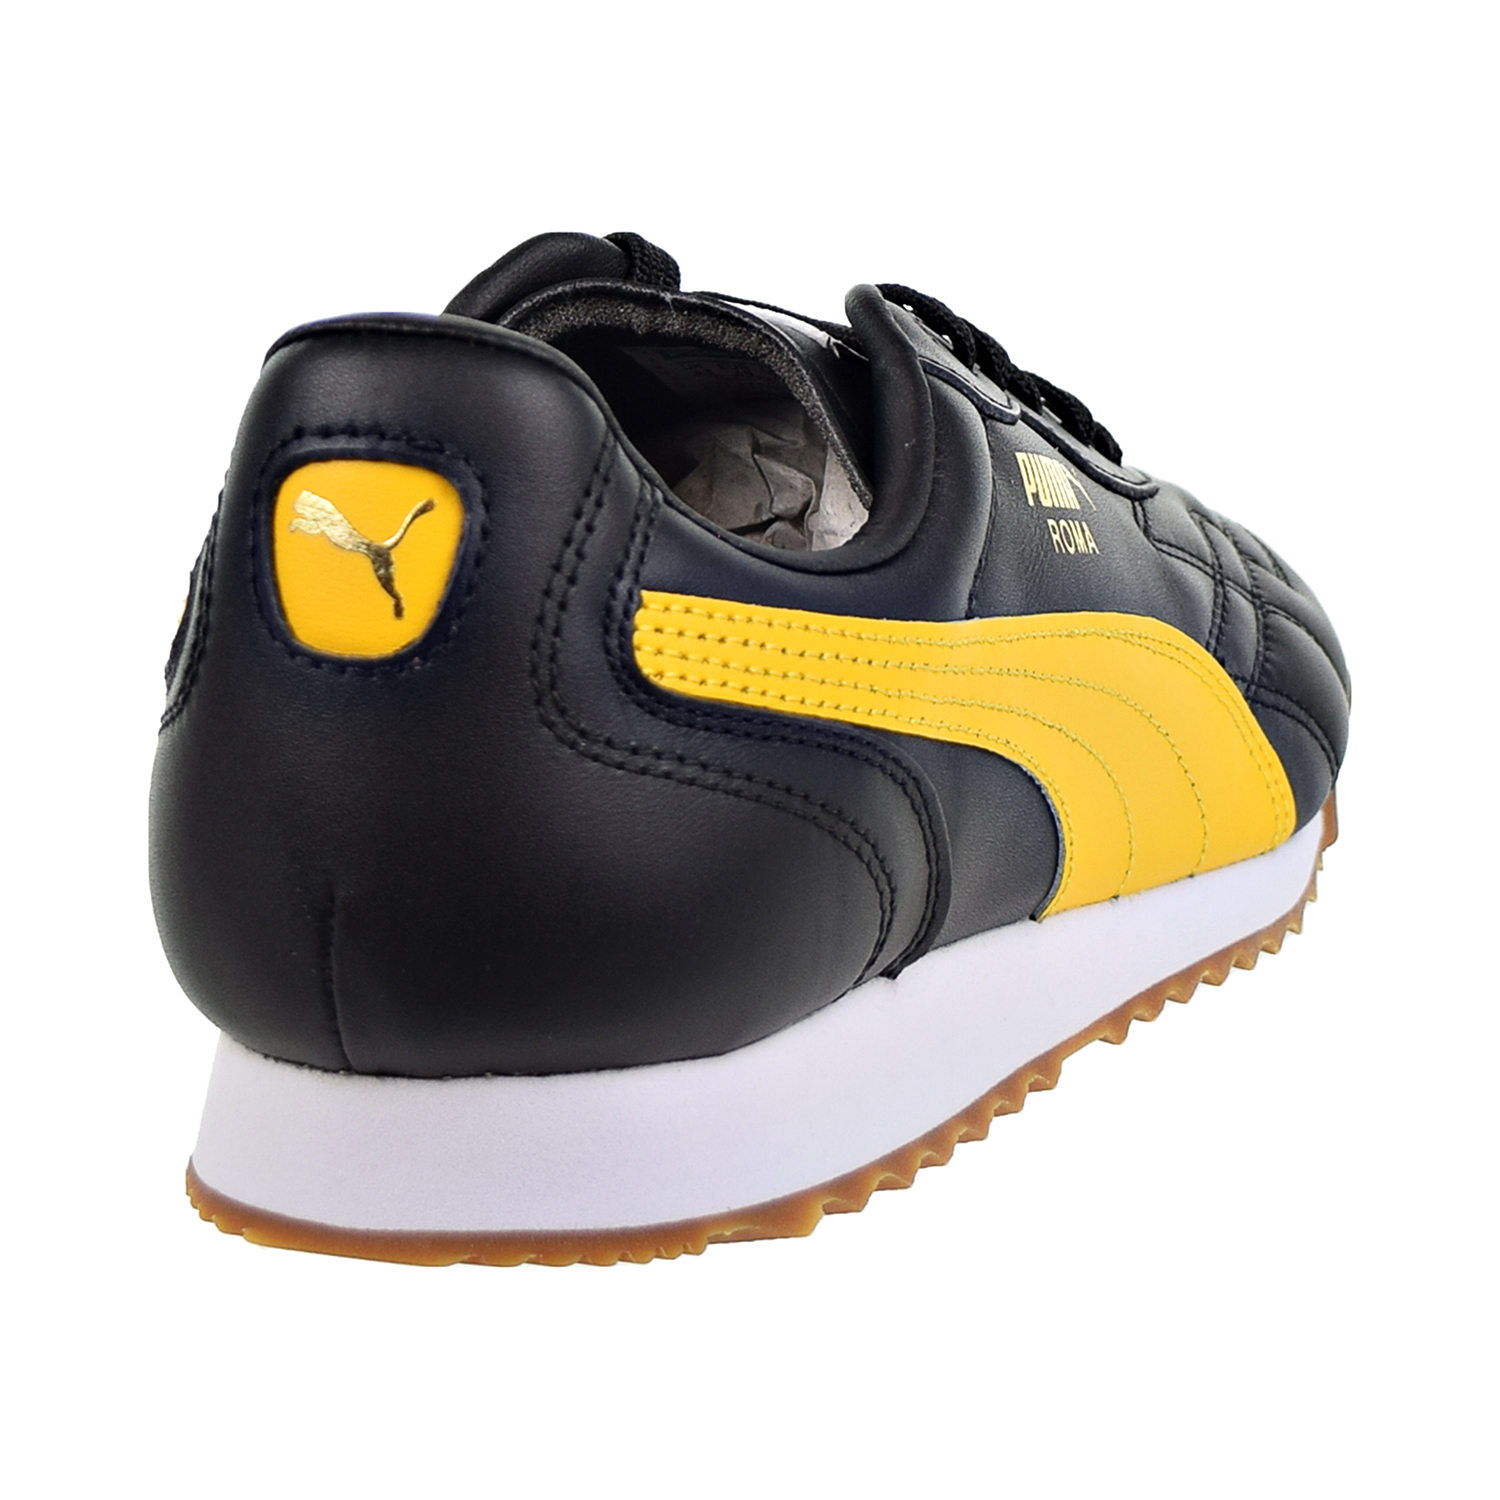 Puma Roma Anniversario Mens Shoes Puma Black-Spectra Yellow 366673-04